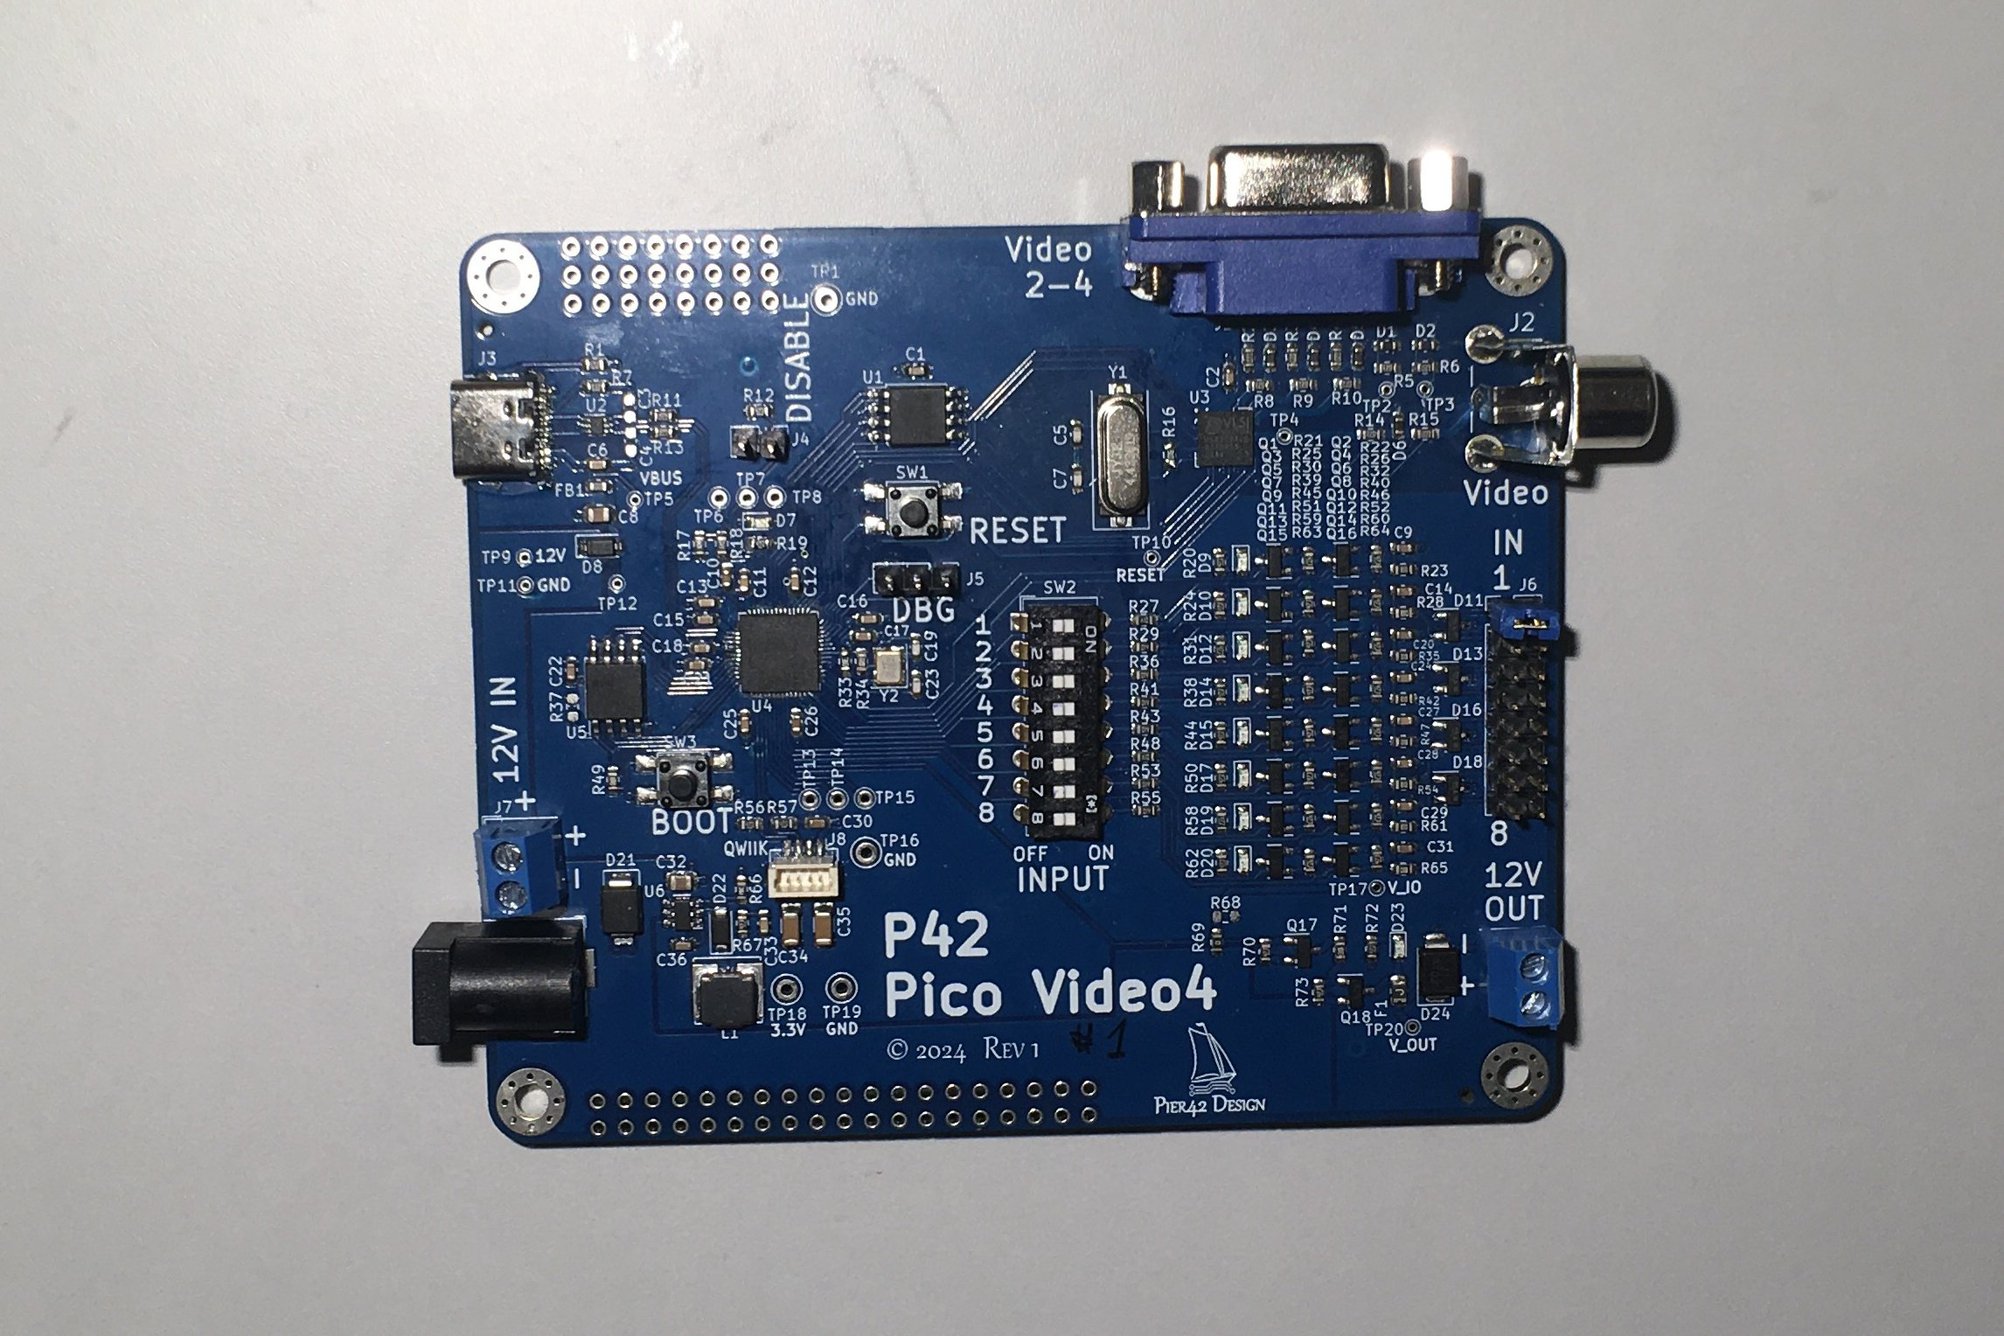 Pico Video4 display board